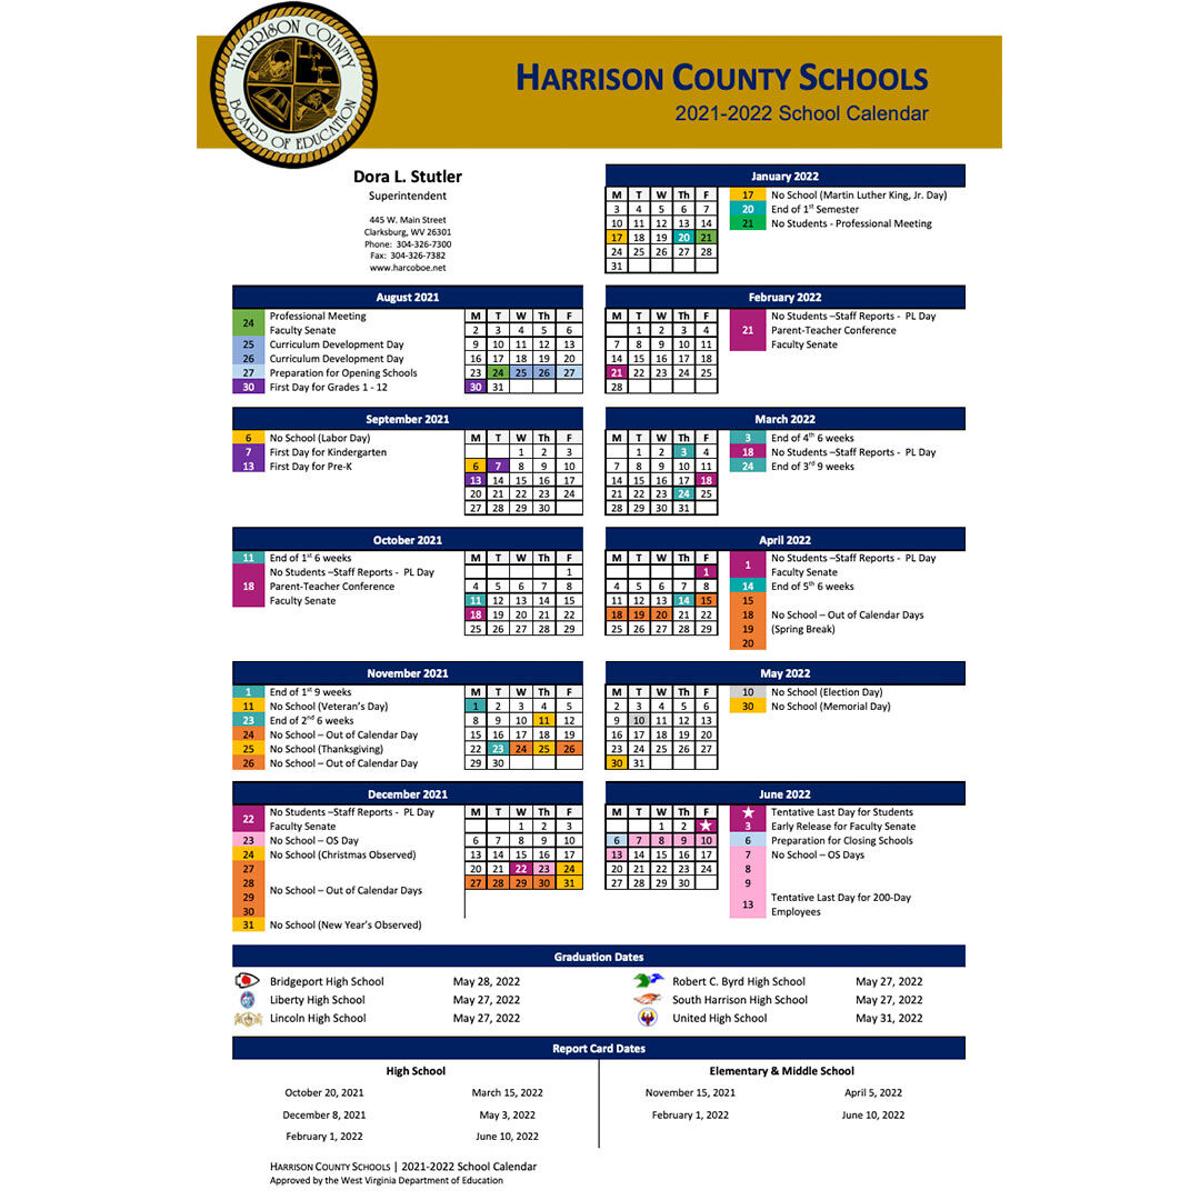 Georgia Southern Academic Calendar 2022 2023 Harrison County Schools Academic Calendar 2021-22 | Wv News | Wvnews.com